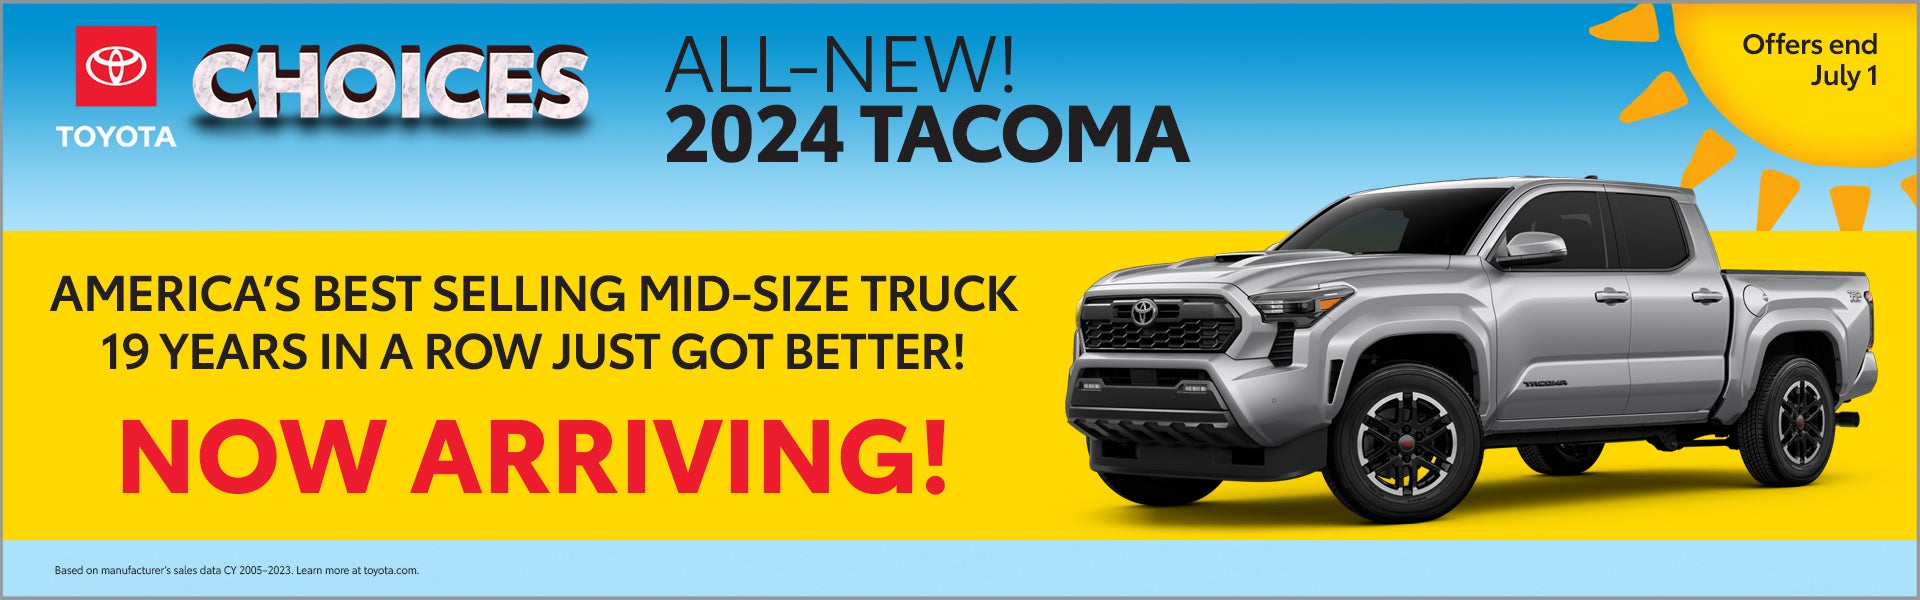 2024 Toyota Tacoma Offer